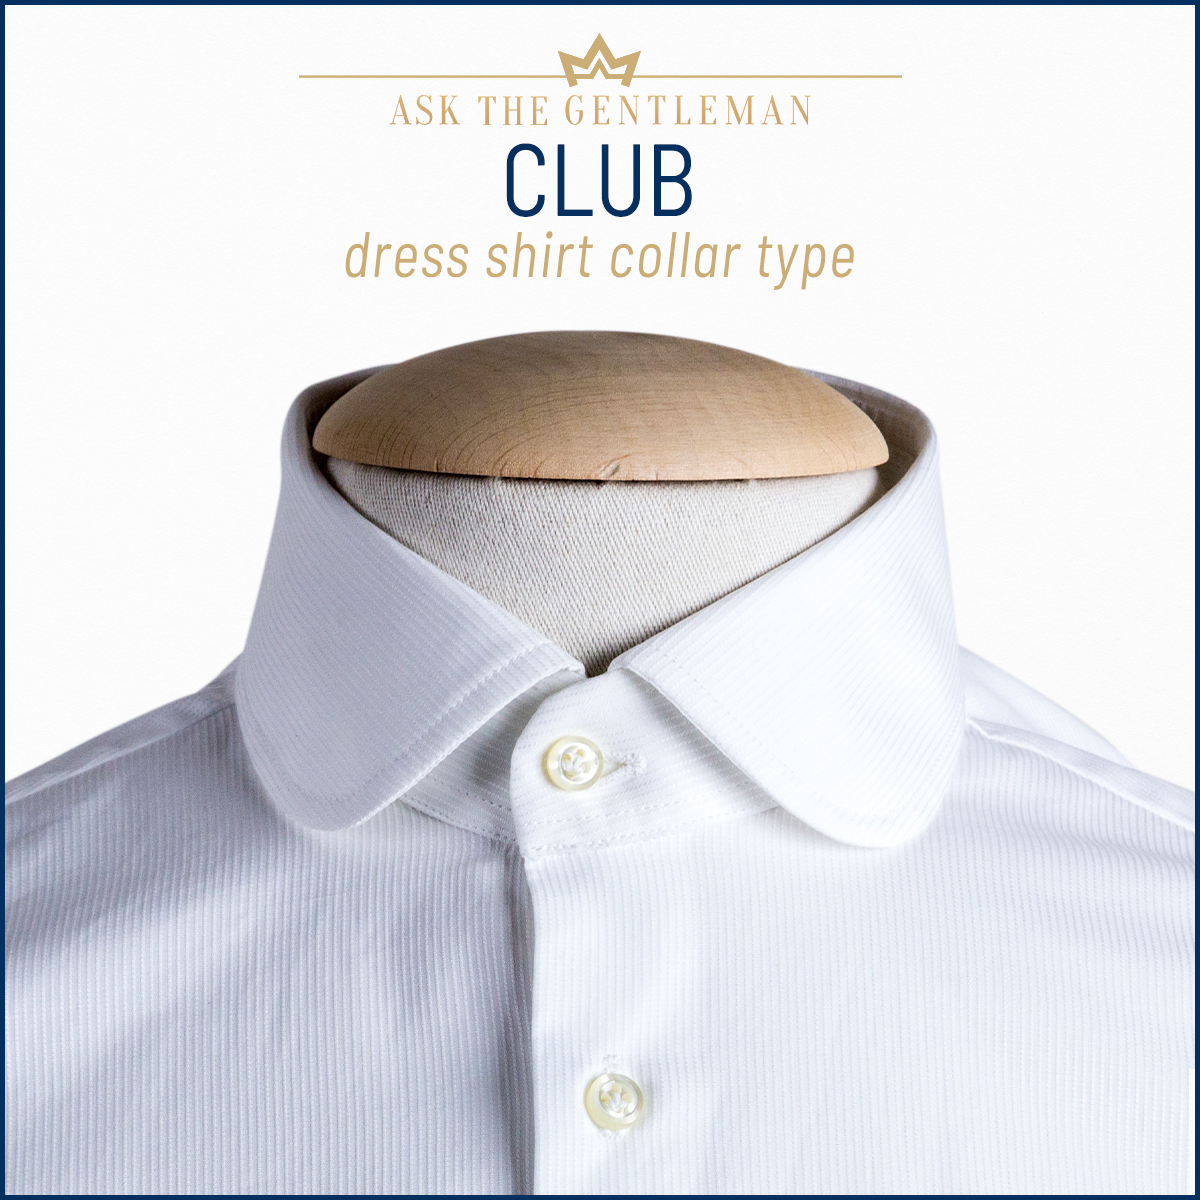 Club dress shirt collar type